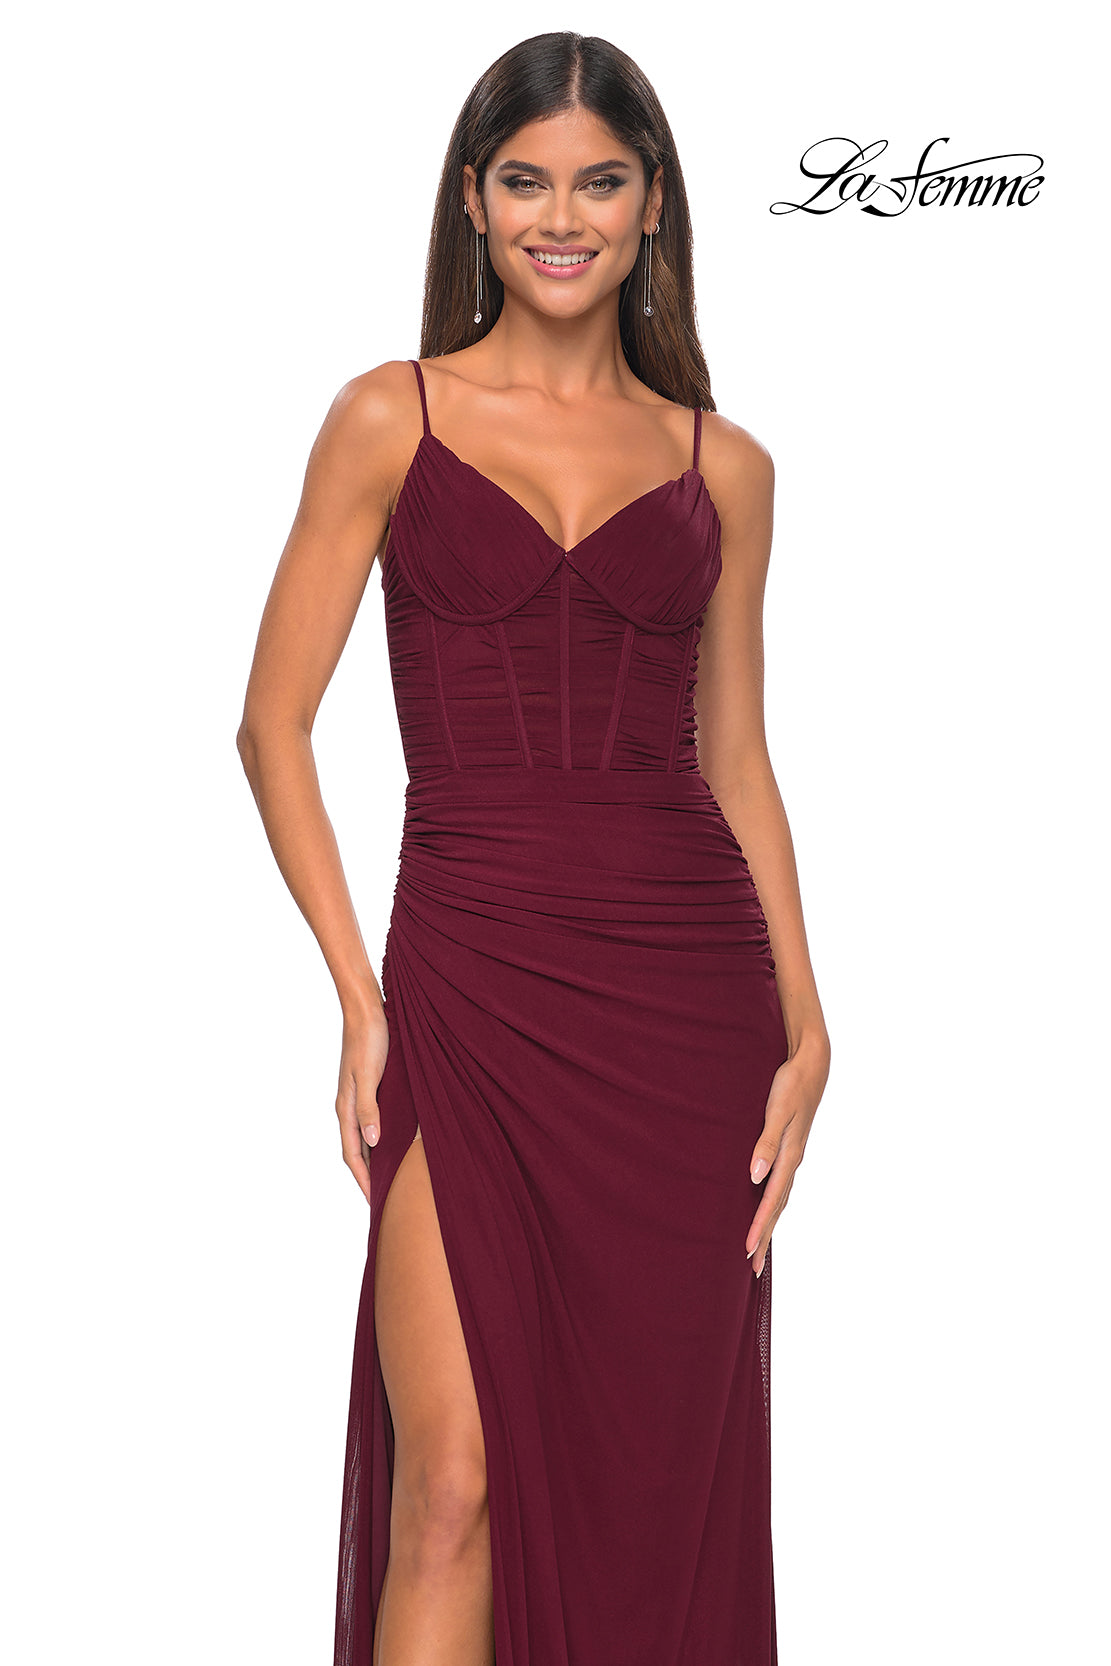 La Femme 32239 V-Neck Neckline Zipper Back High Slit Net Jersey Fitted Evening Dress